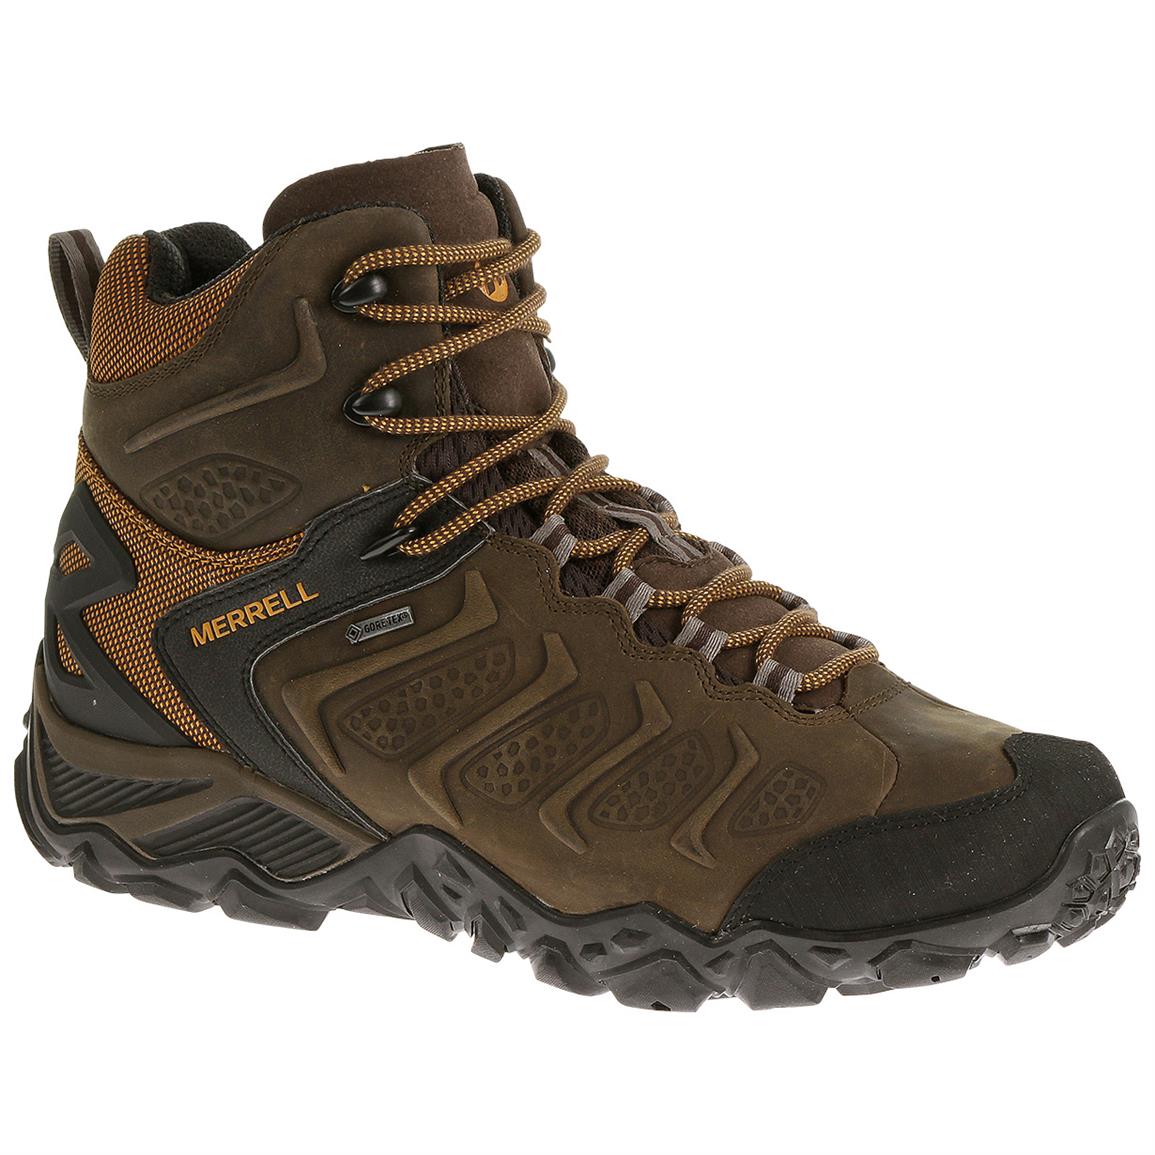 Merrell Chameleon Shift Waterproof Mid Hiking Boots 643857, Hiking